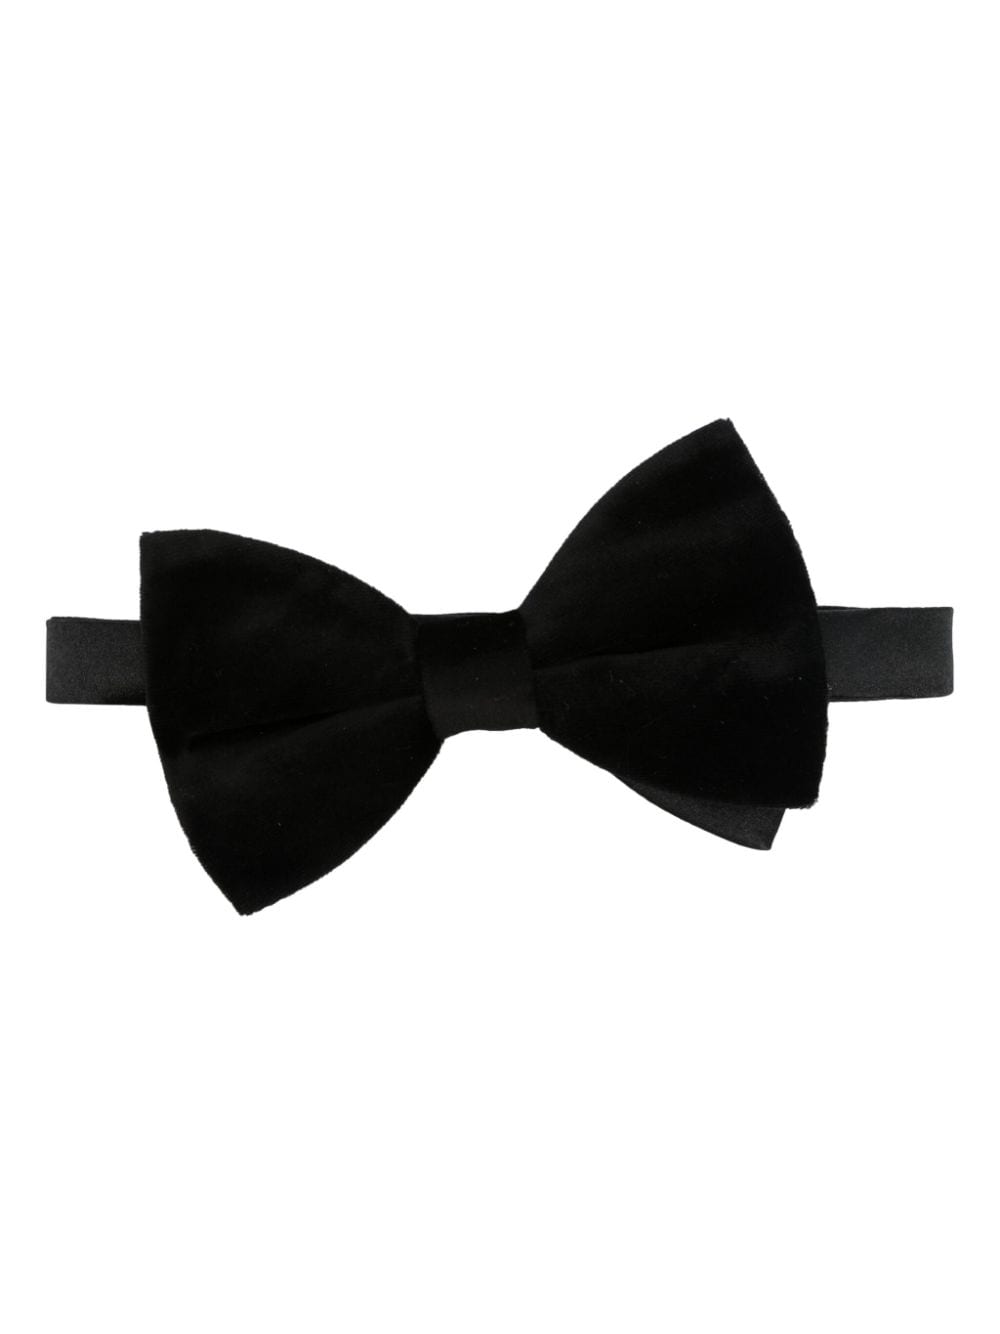 FURSAC adjustable velvet bow tie - Black von FURSAC